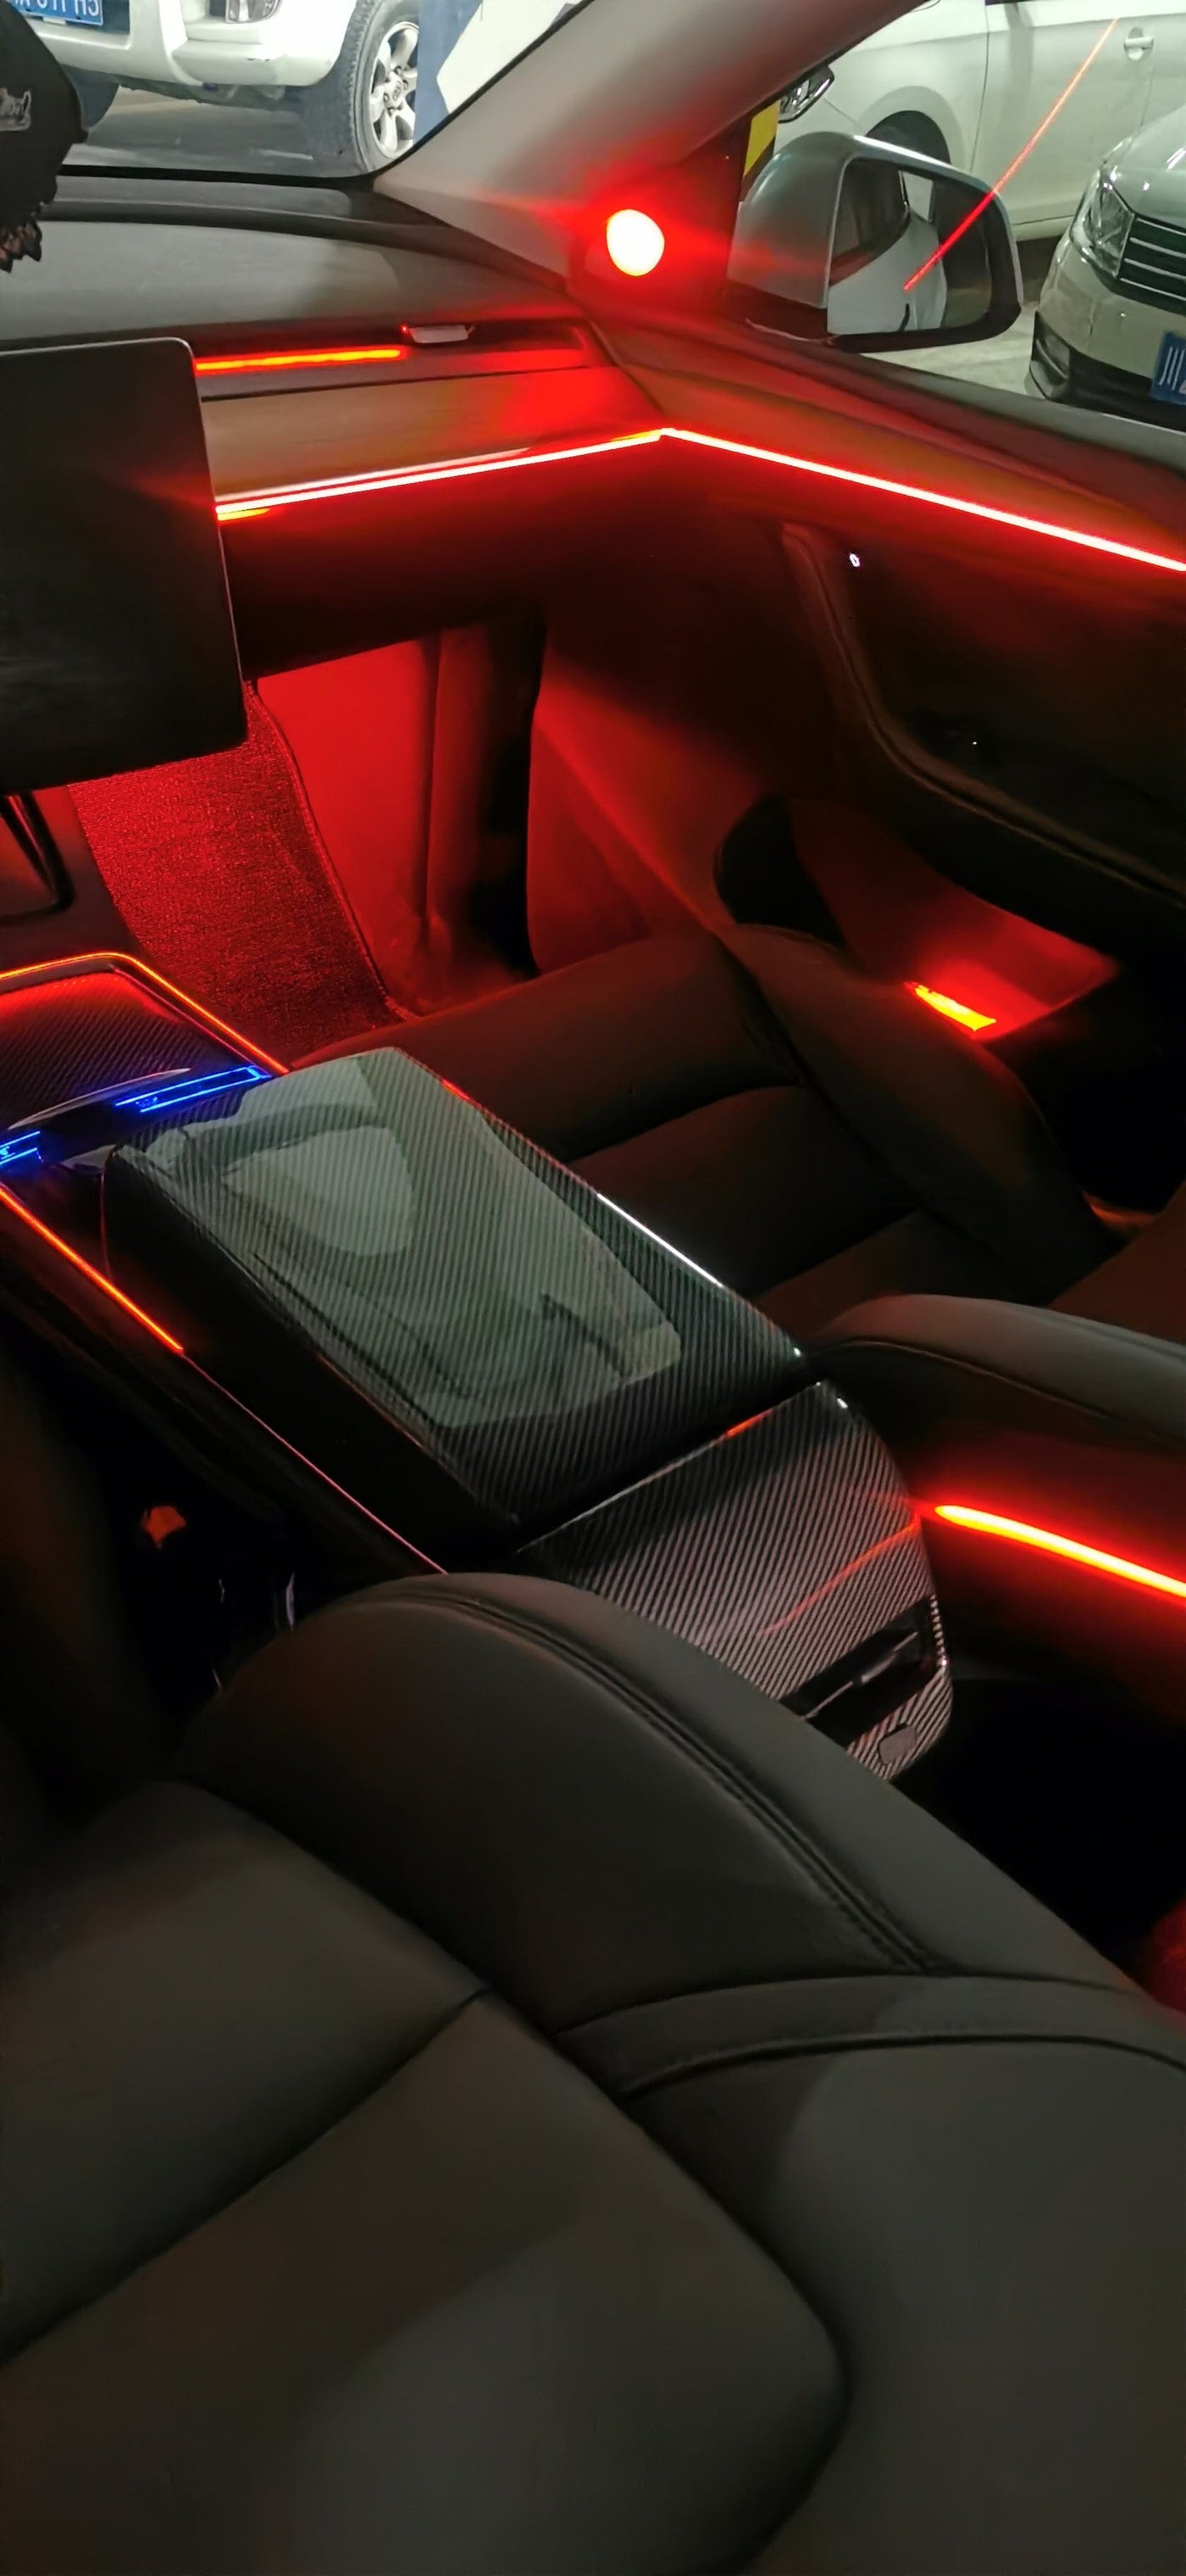 Ambient Lighting Car in Interior Car Lighting 